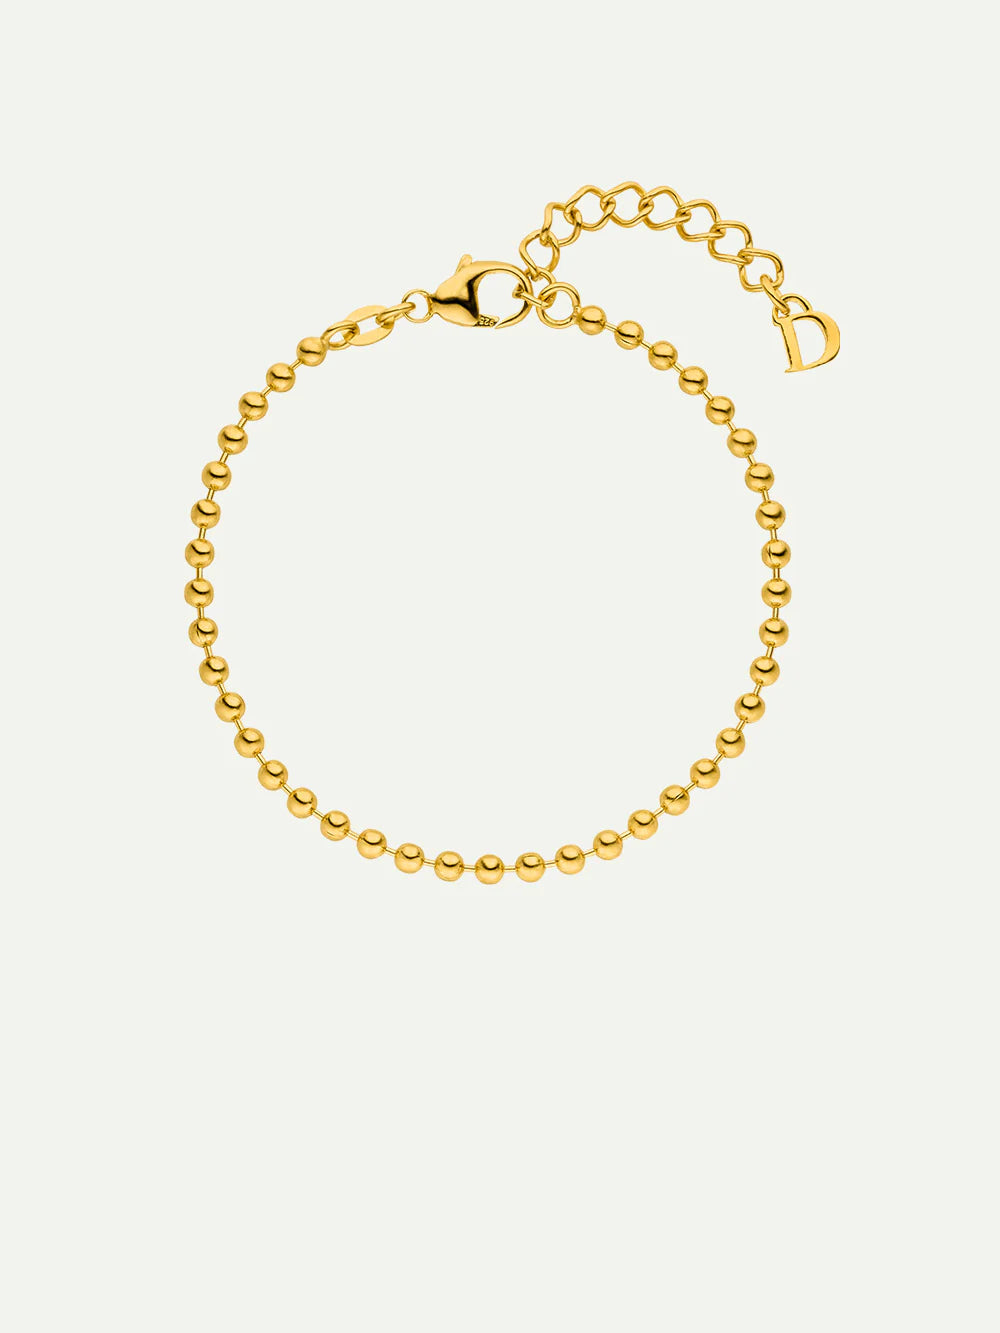 Louise Gold bracelet